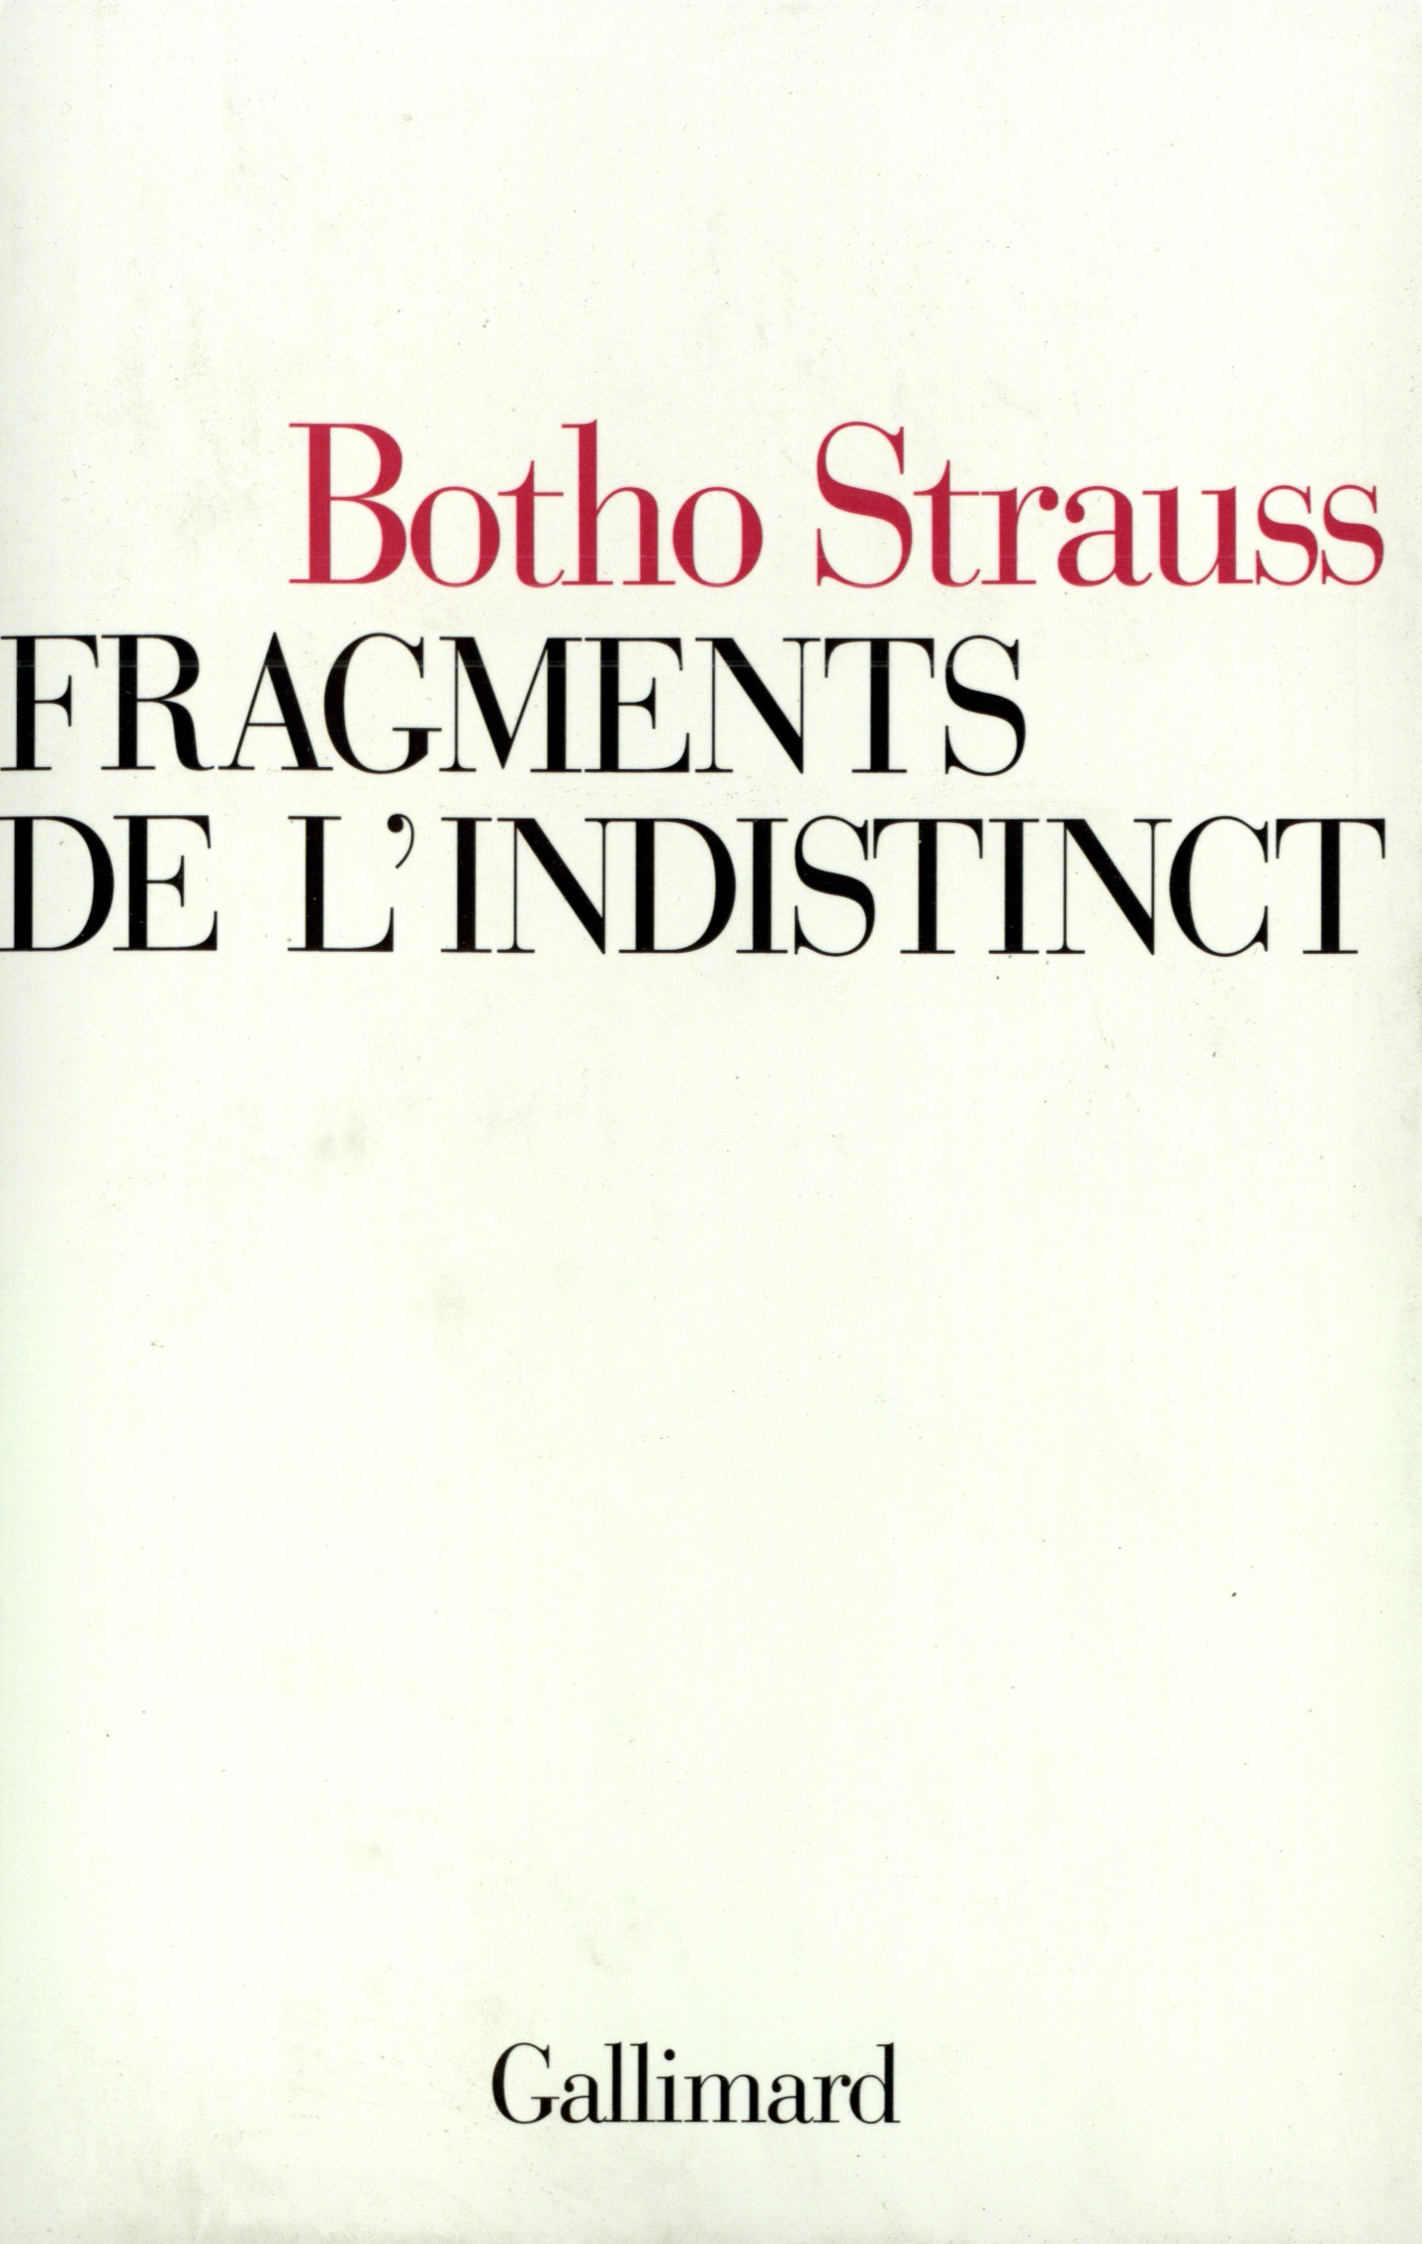 Fragments de l'indistinct (9782070731329-front-cover)